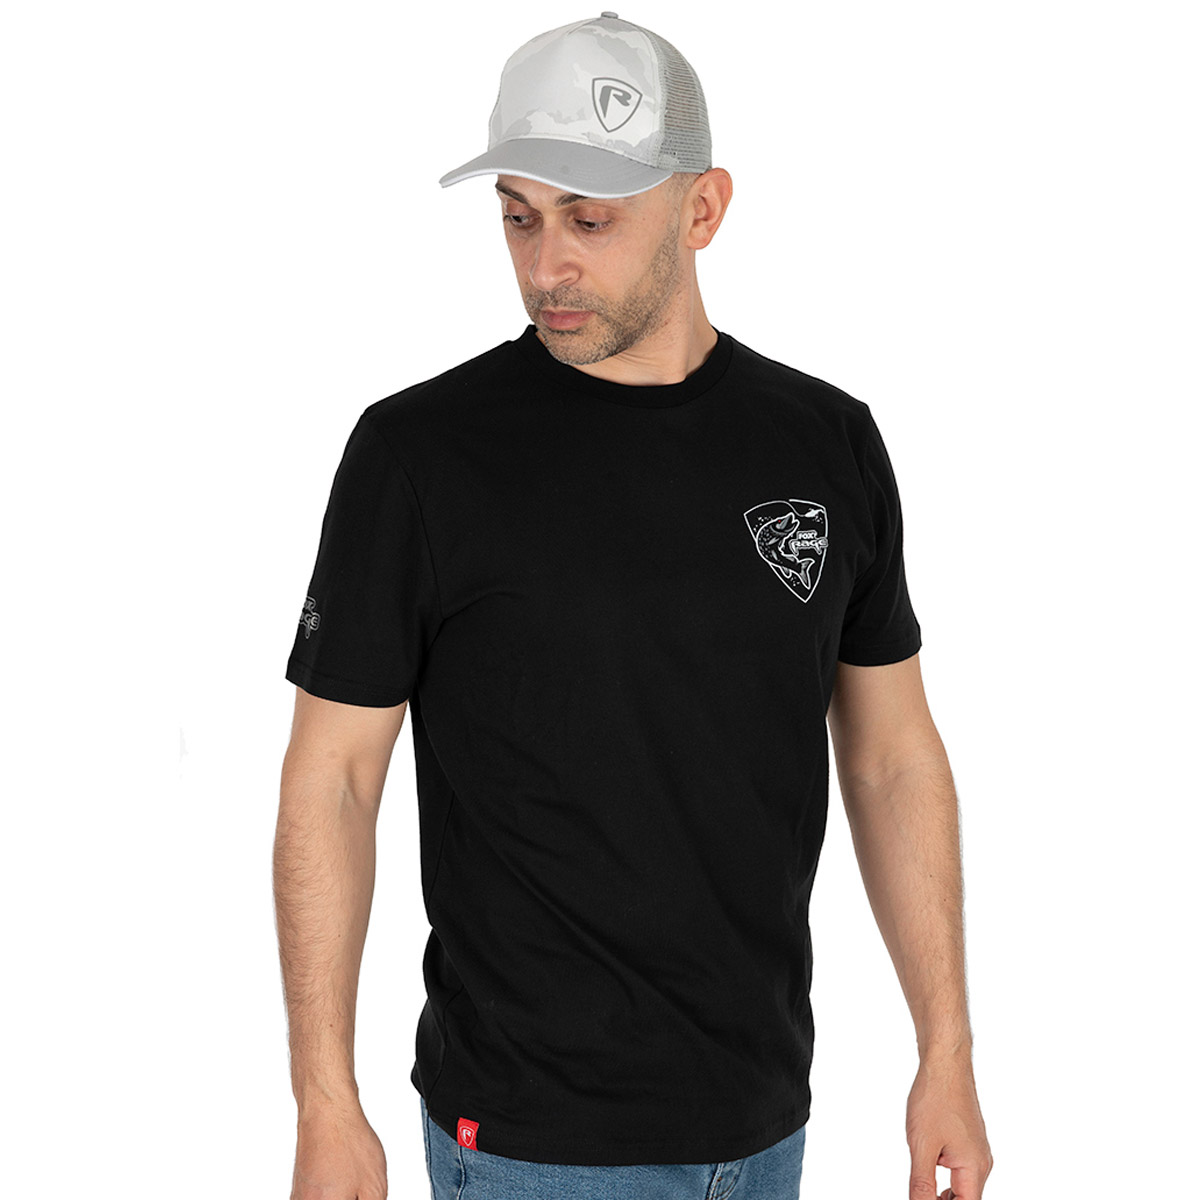 Fox Rage Limited Edition Pike T-Shirts